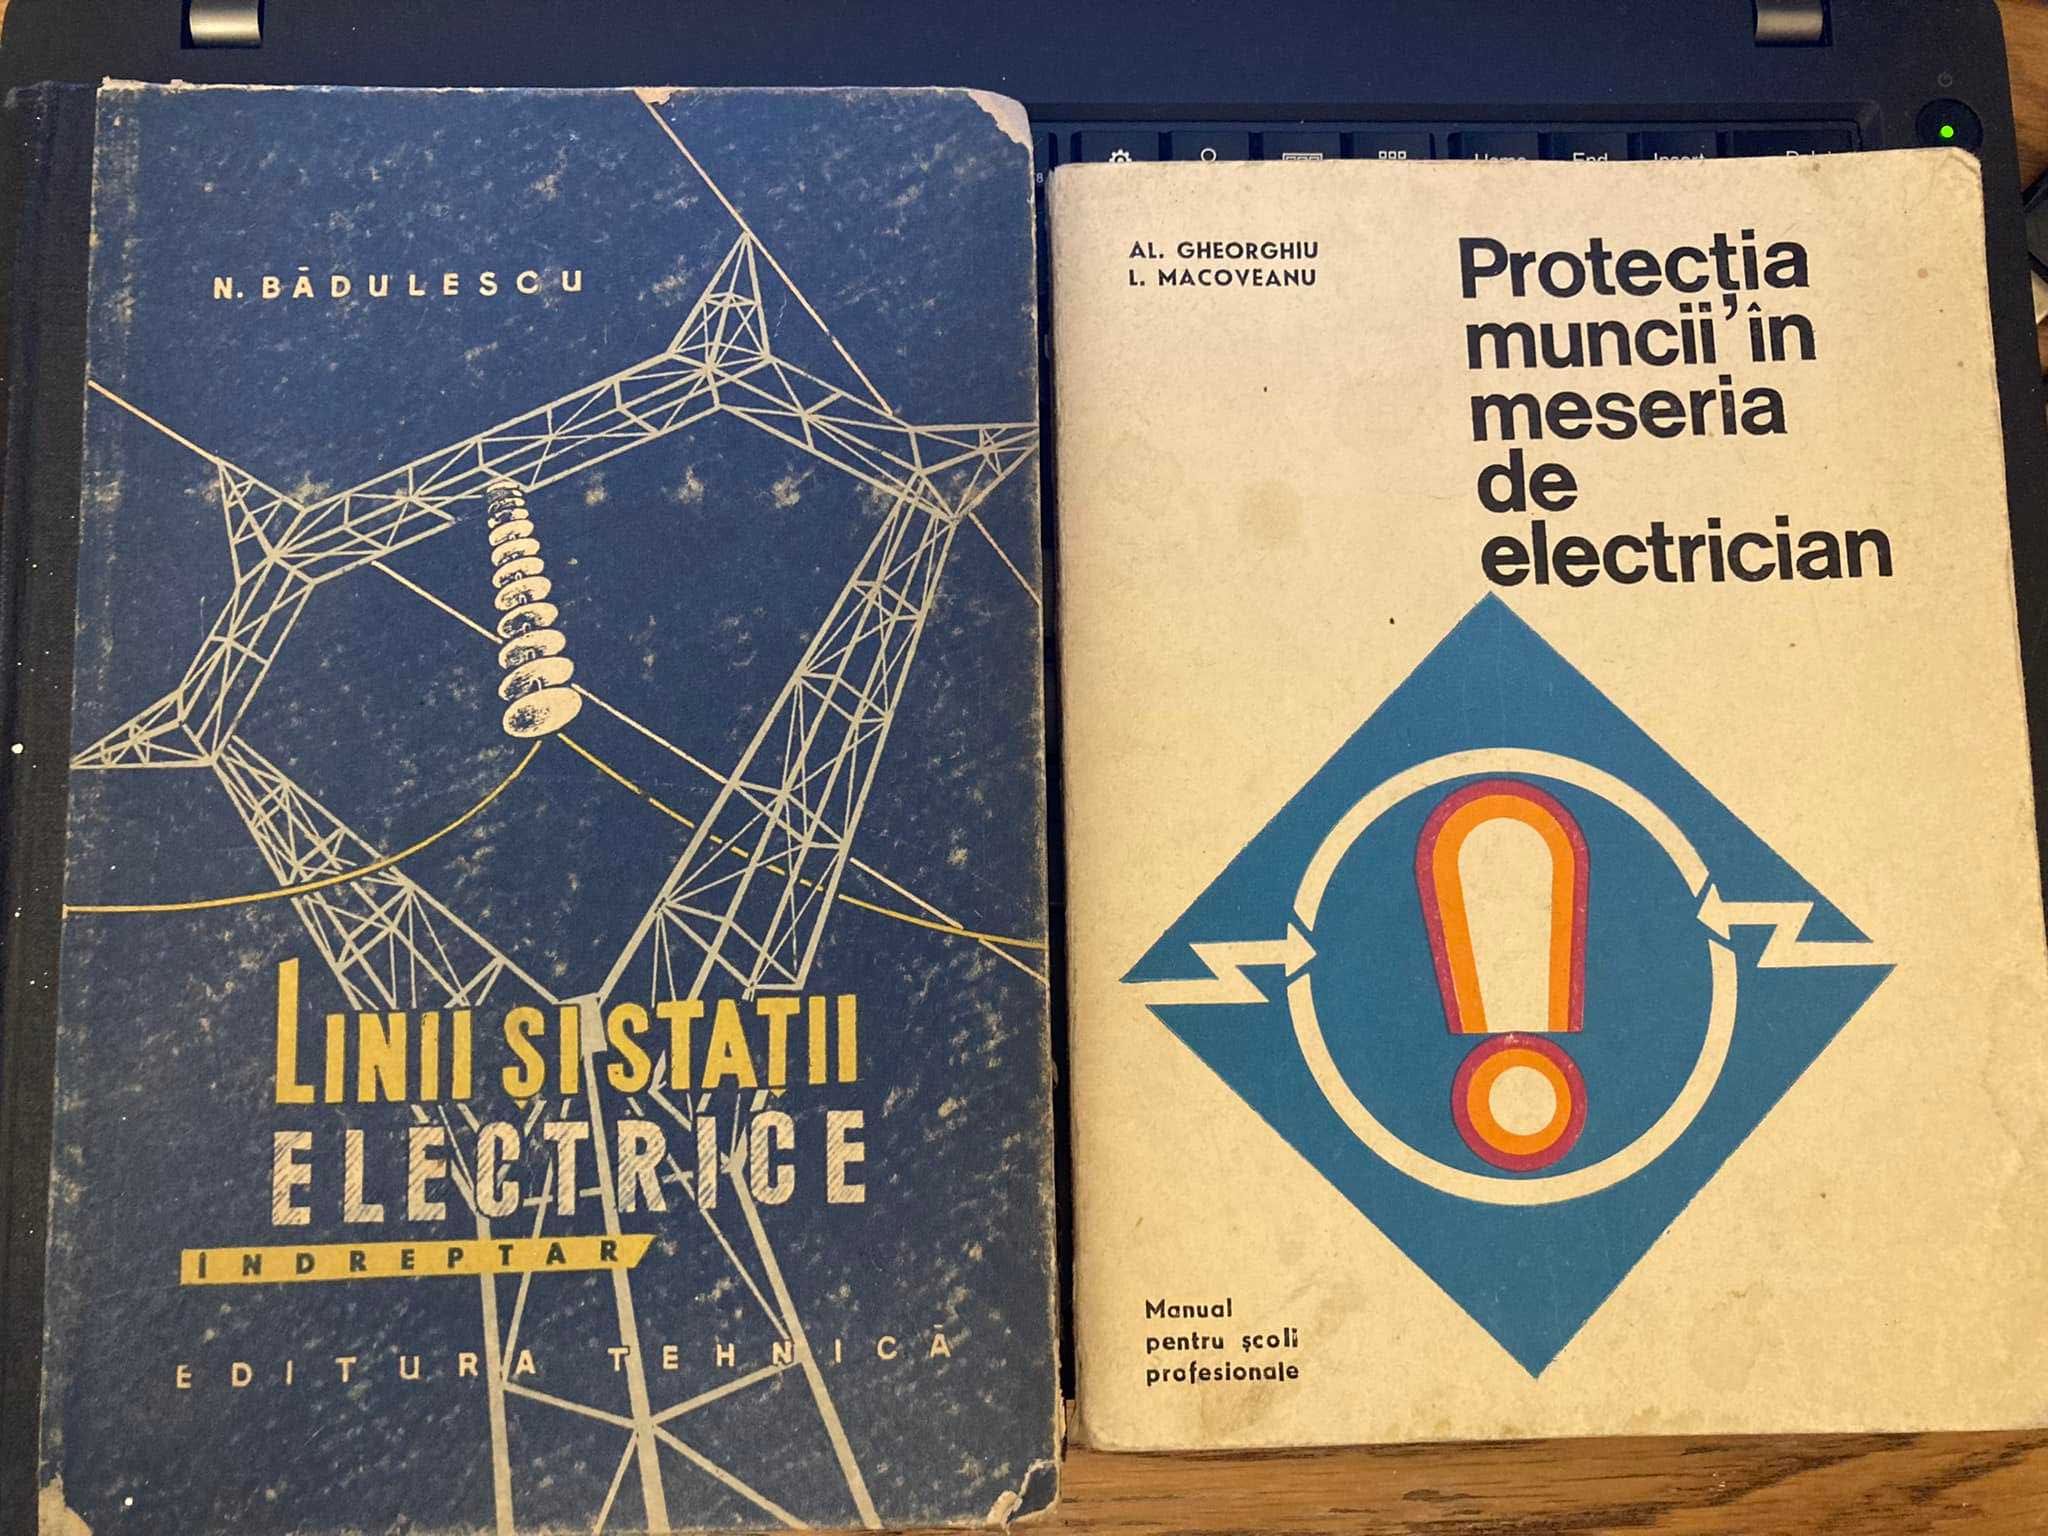 Linii si statii electrice, Indreptar - N. Radulescu, 1962